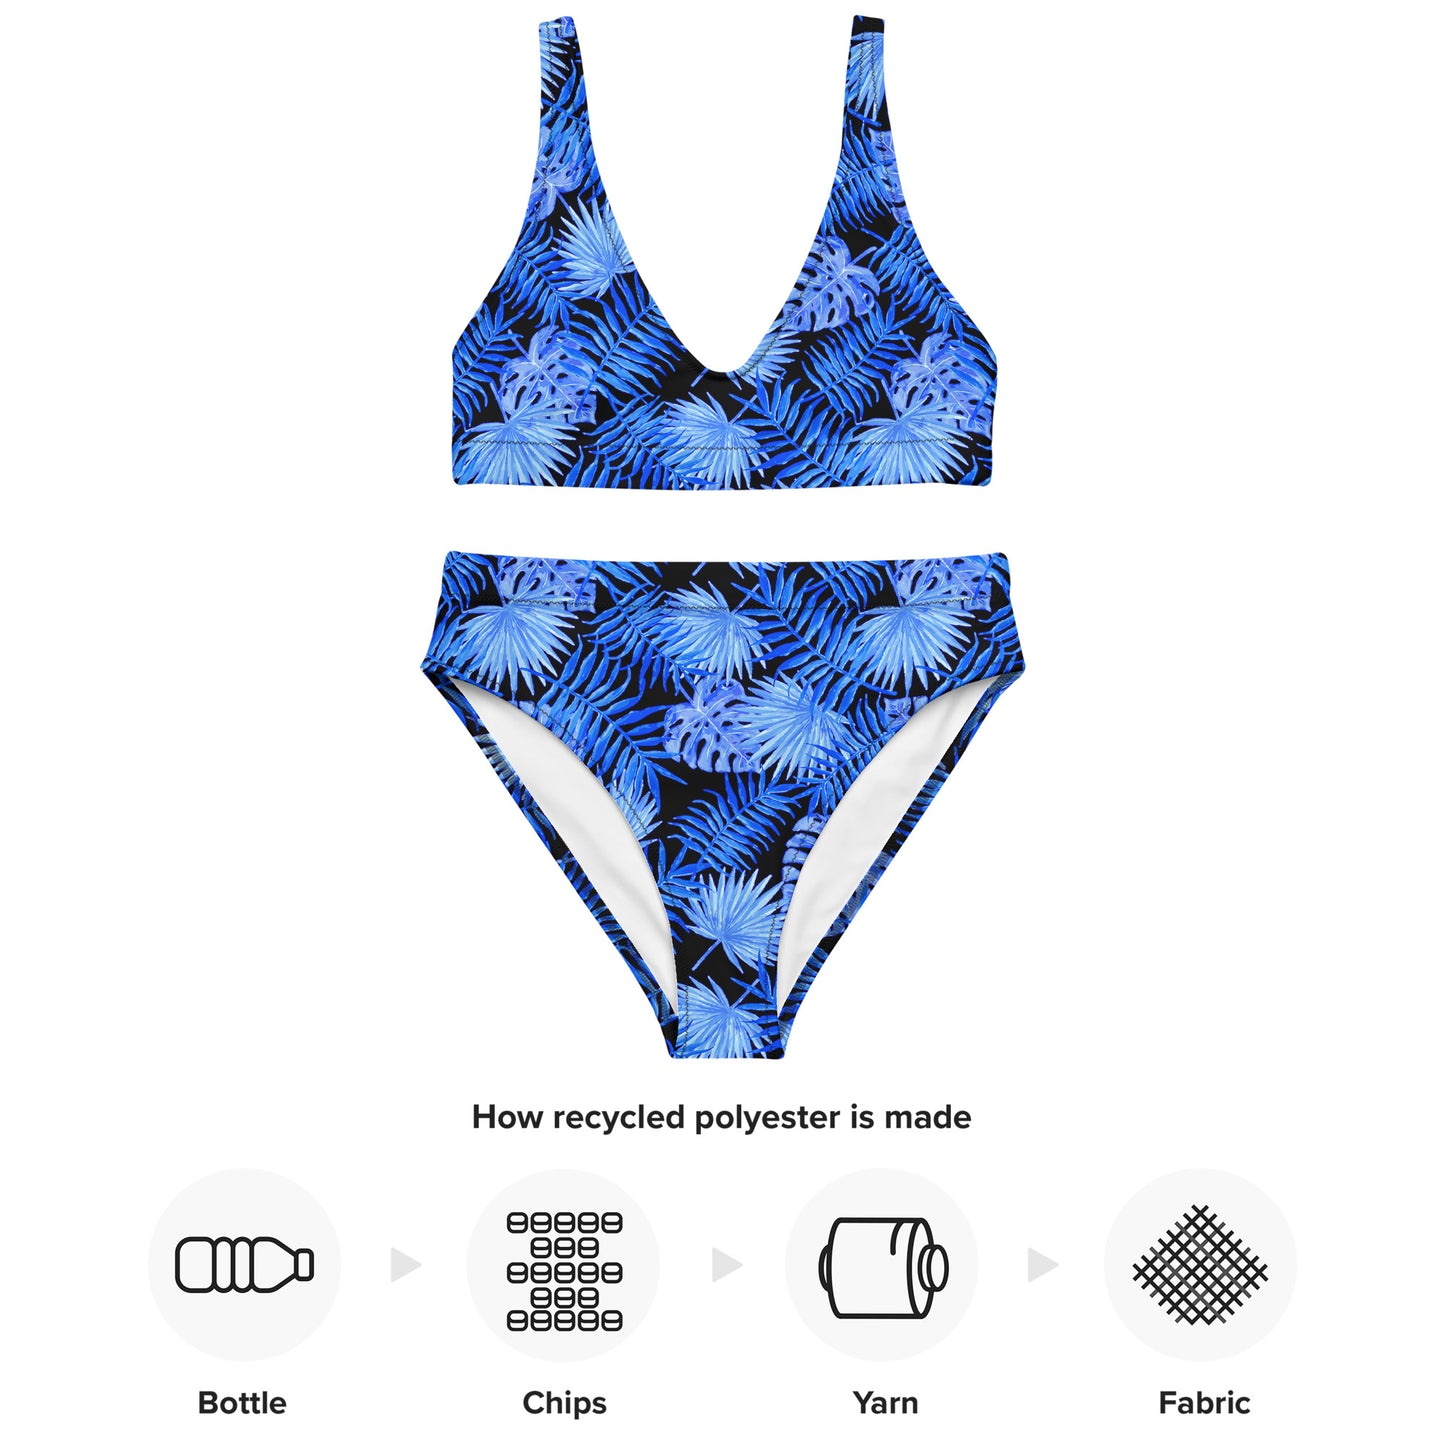 Snooty Fox Art High-Waisted Bikini - Blue Palm Pattern